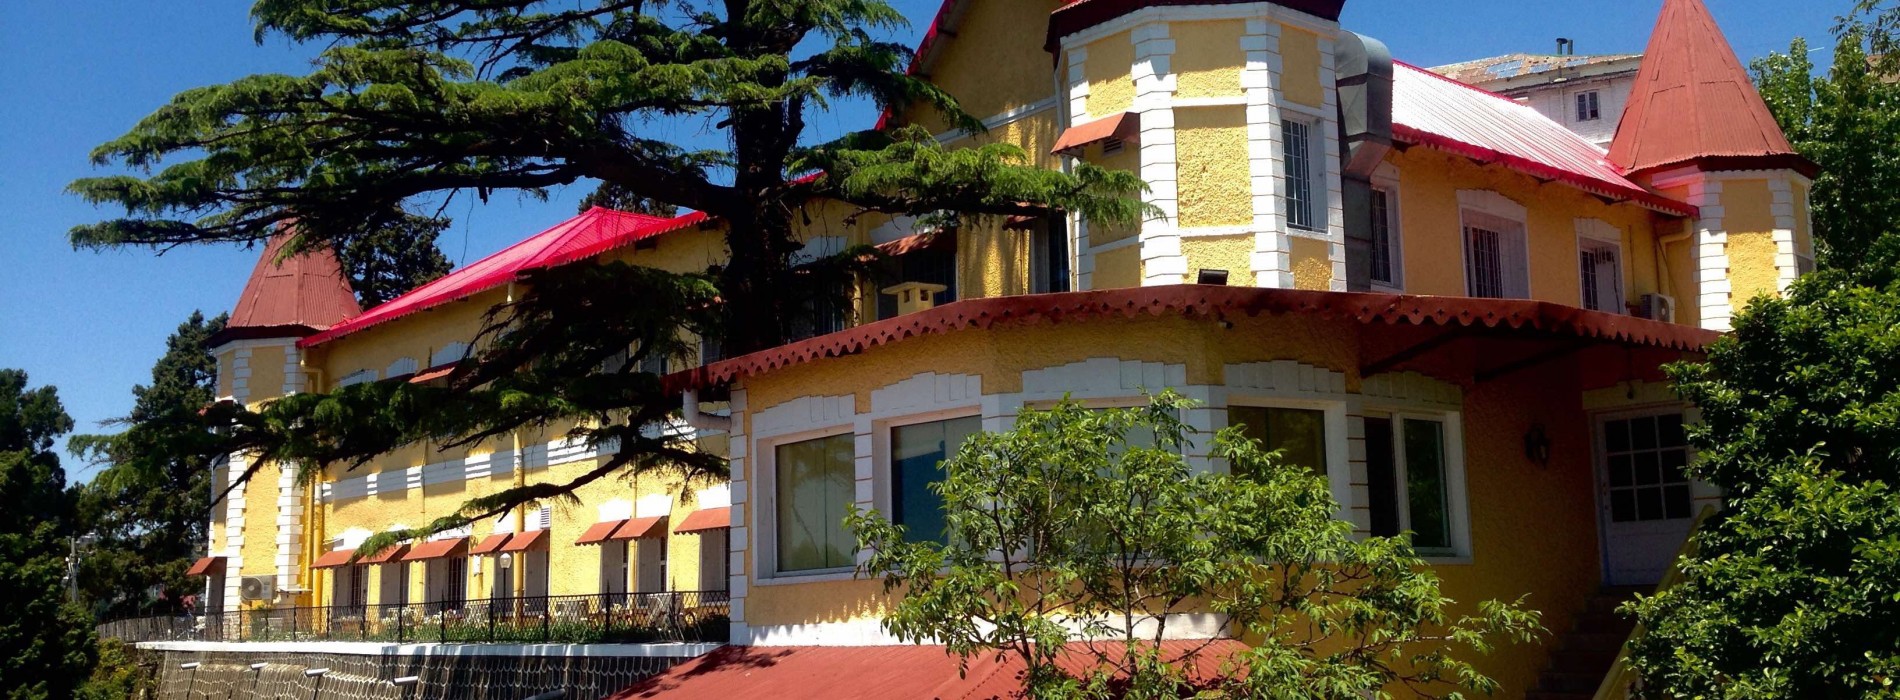 WelcomHeritage Kasmanda Palace registered 20% growth in 2018